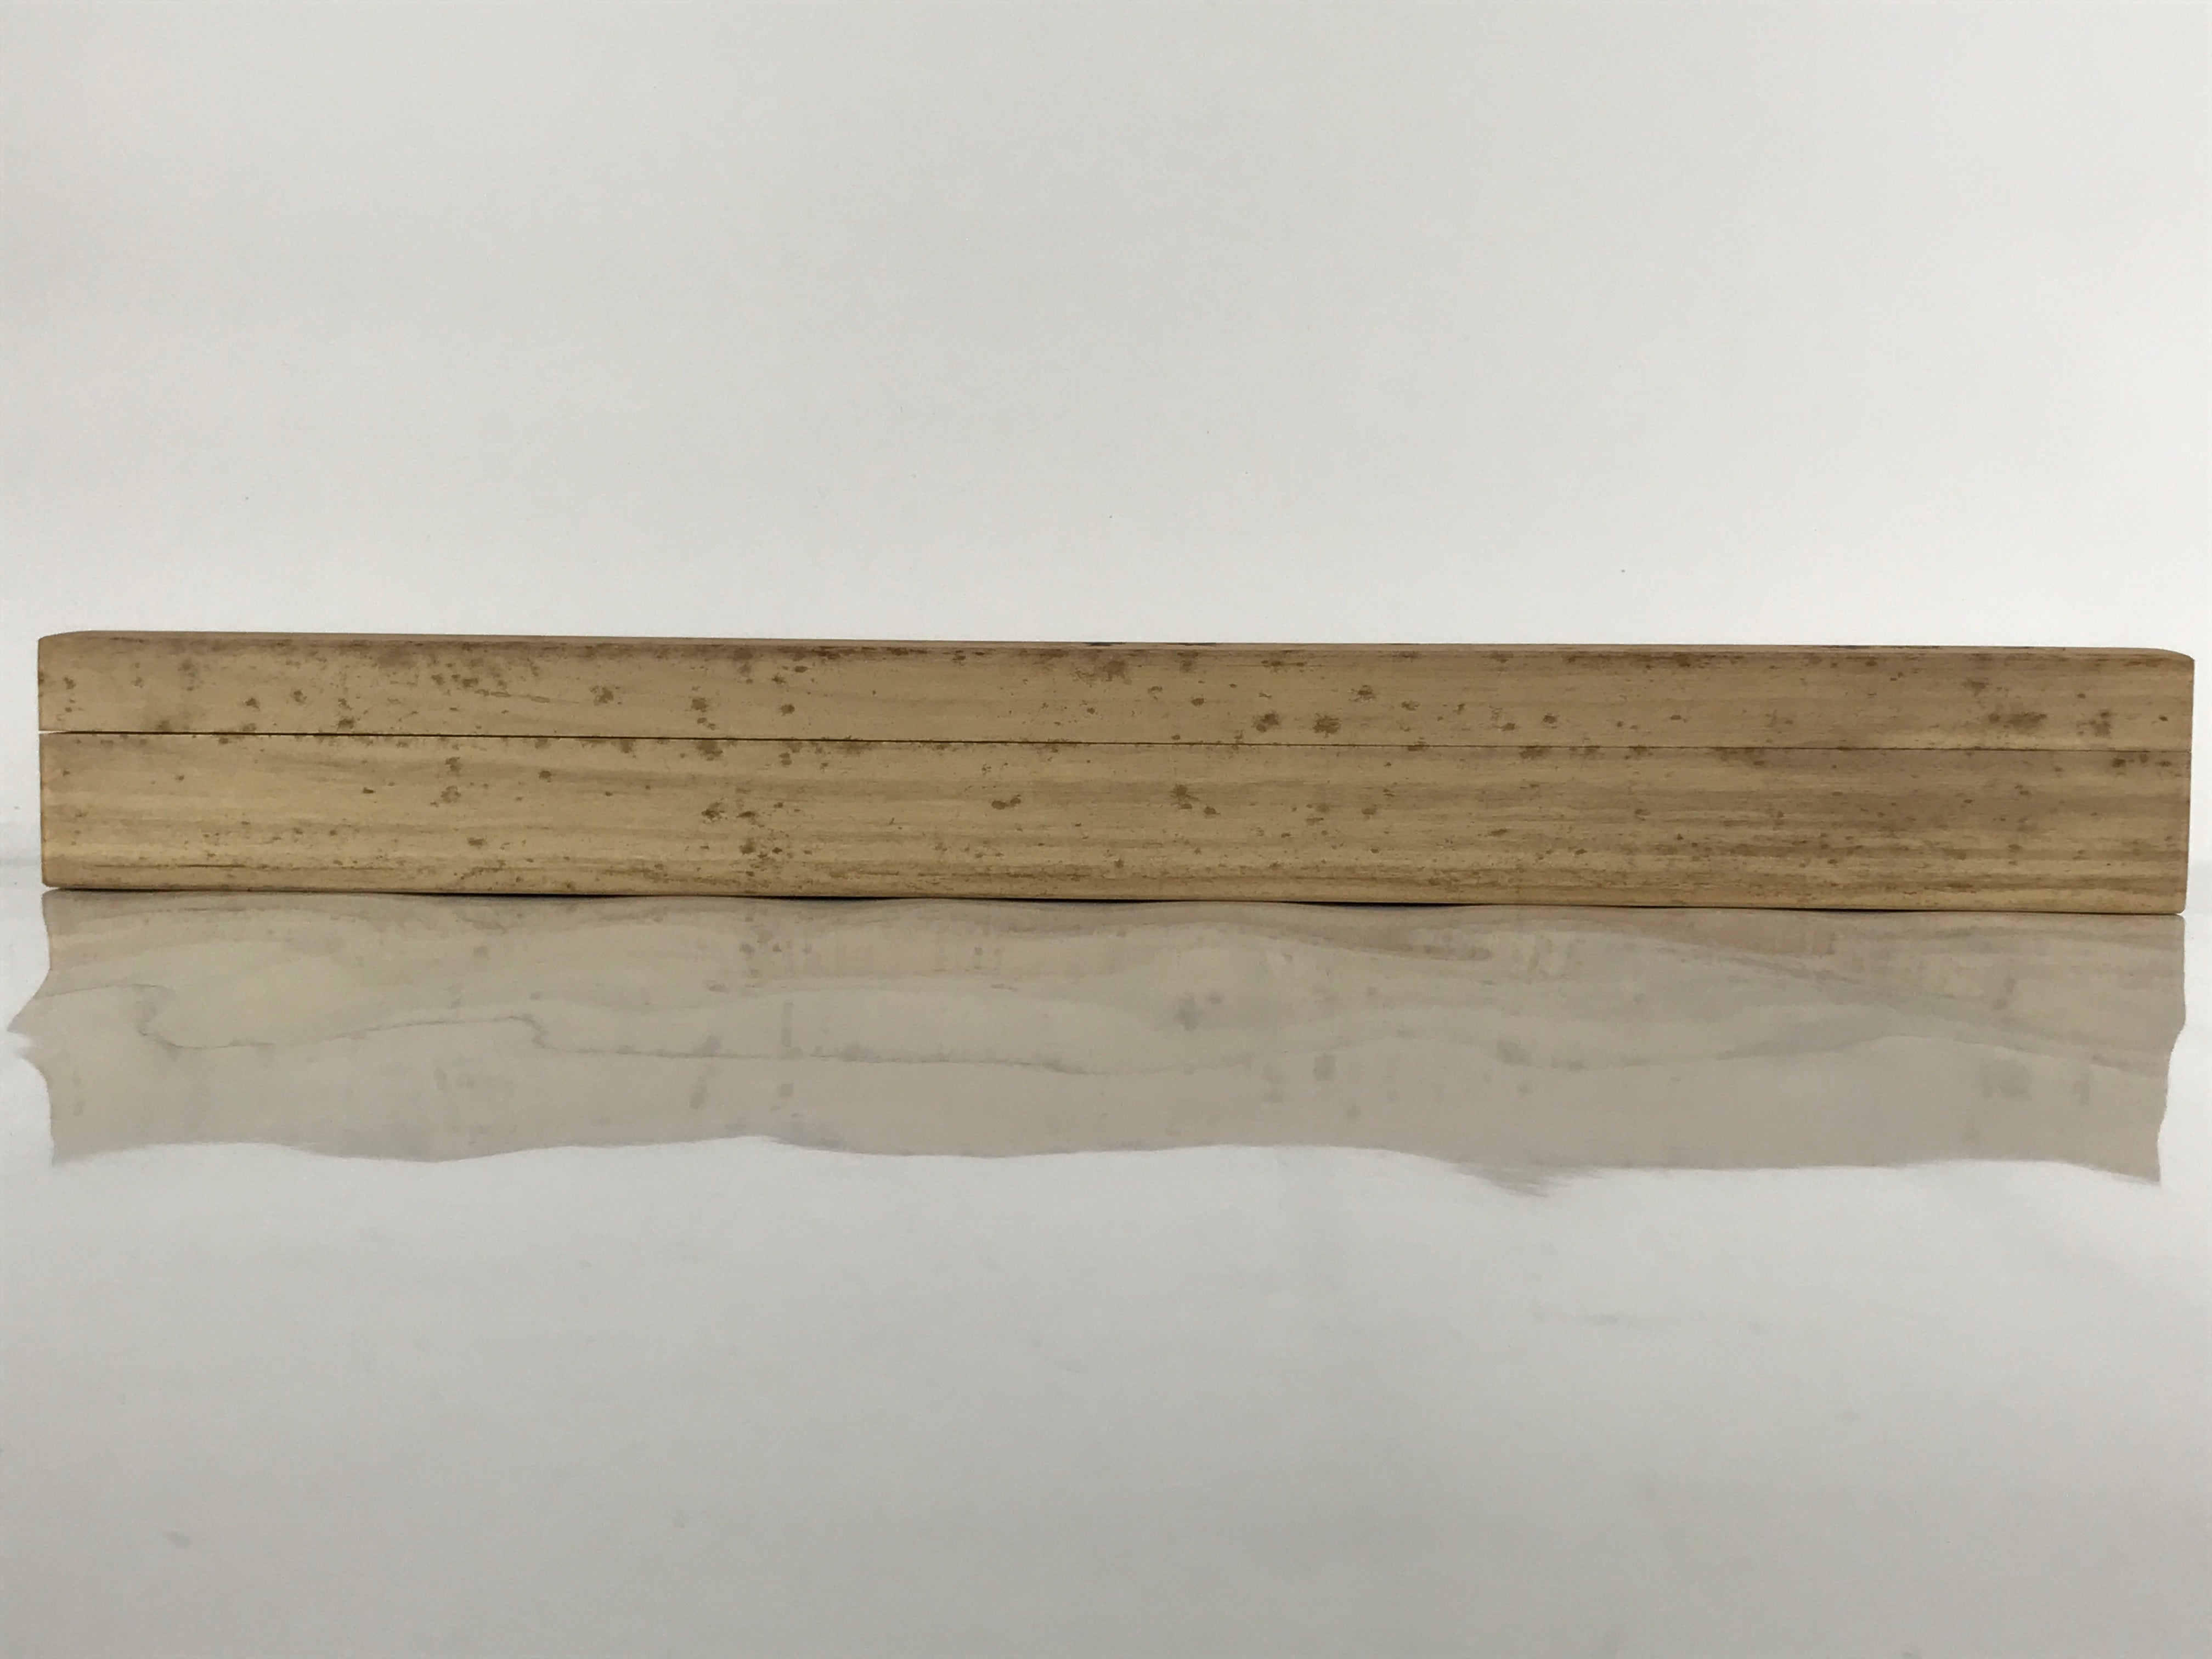 Japanese Wooden Hanging Scroll Box Vtg Kakejiku Hako Inside Length 60.5cm SB296